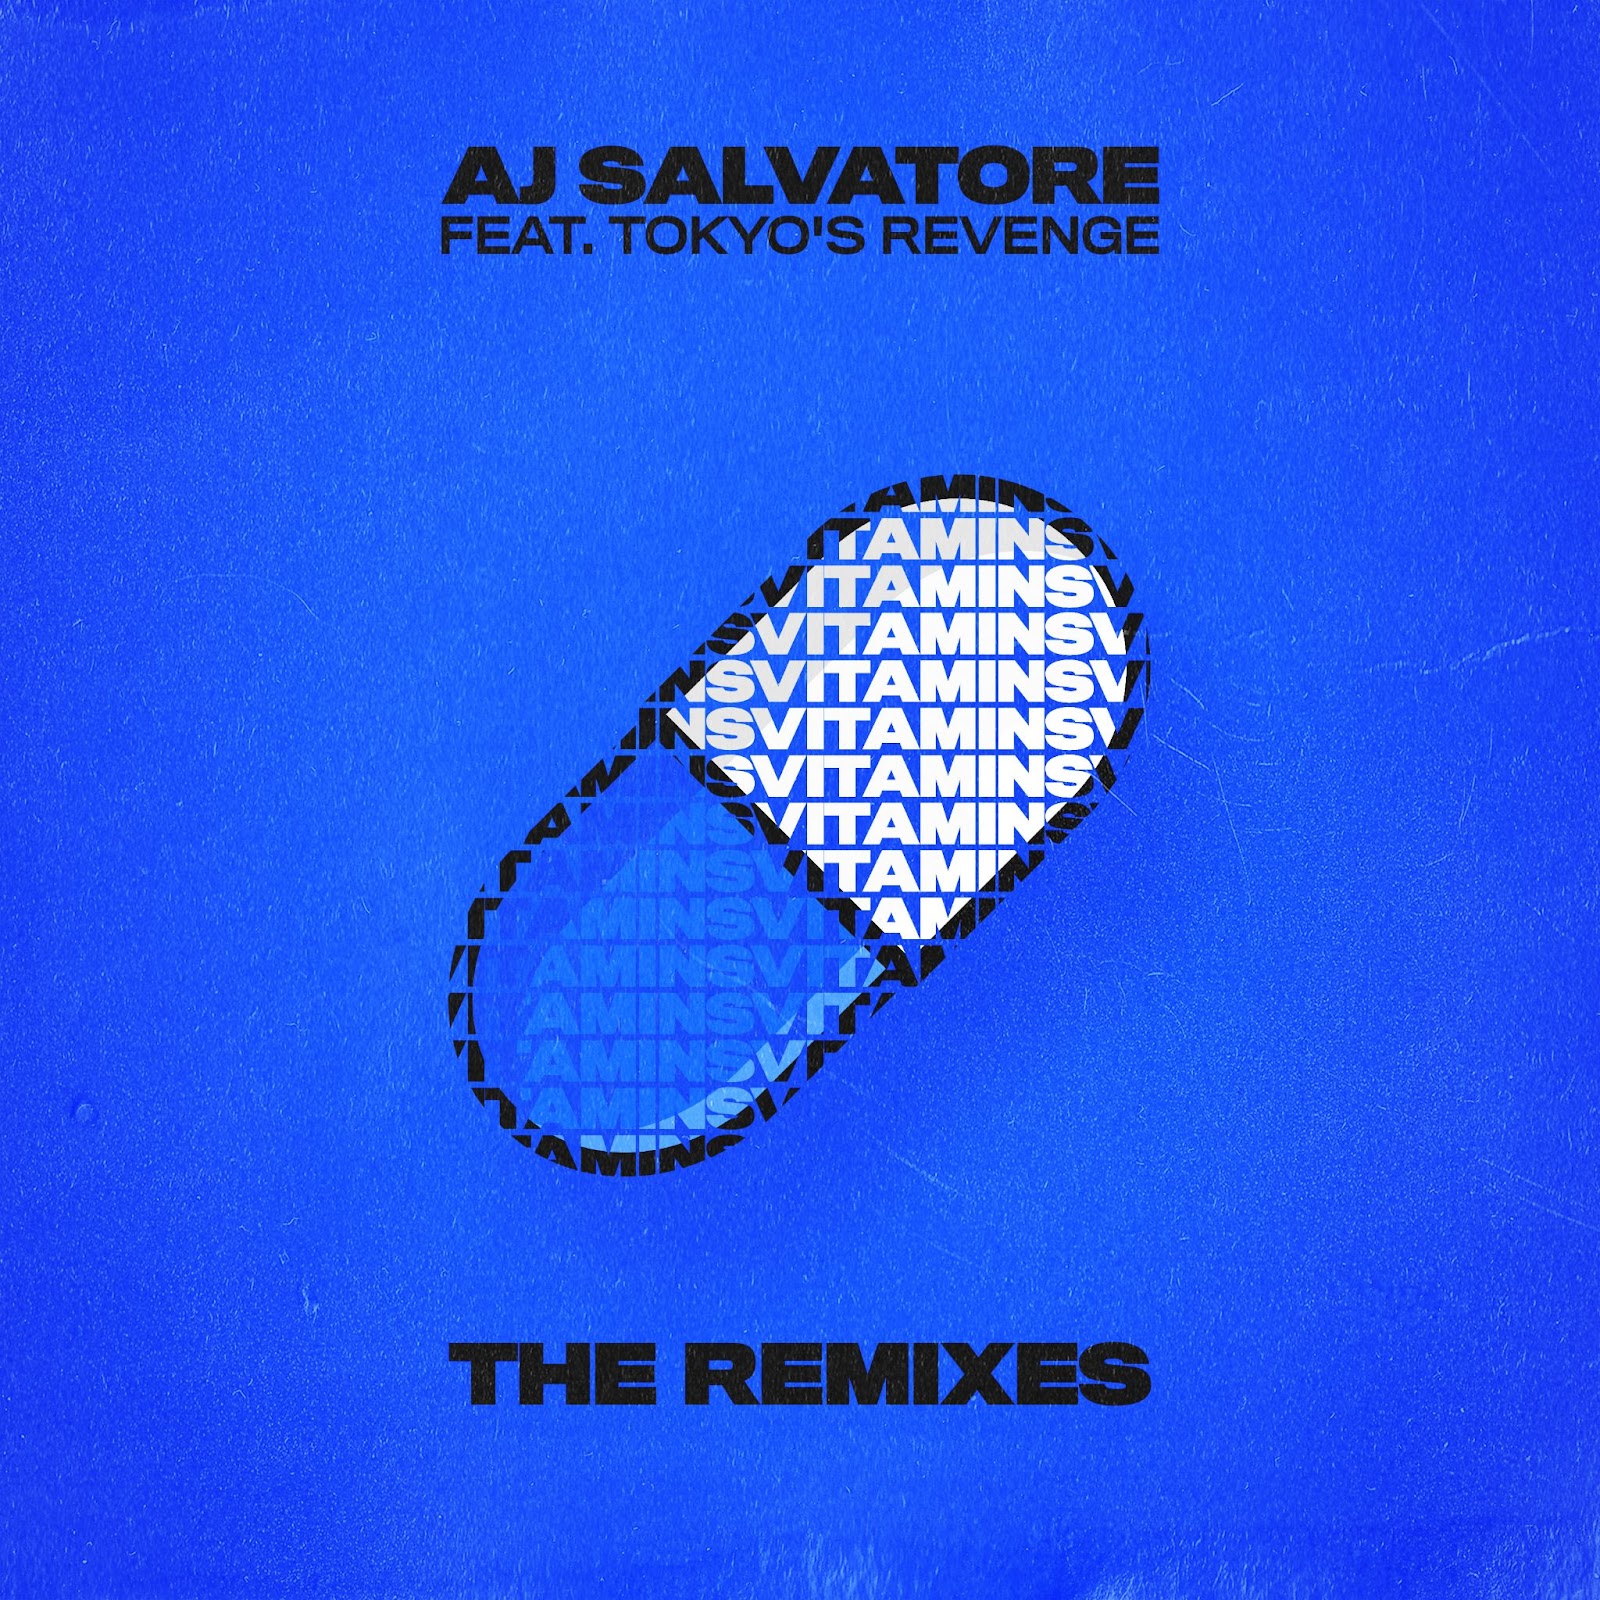 AJ Salvatore Tags Chenda, KULTIVATE, & Others To Remix Successful Single ‘Vitamins’